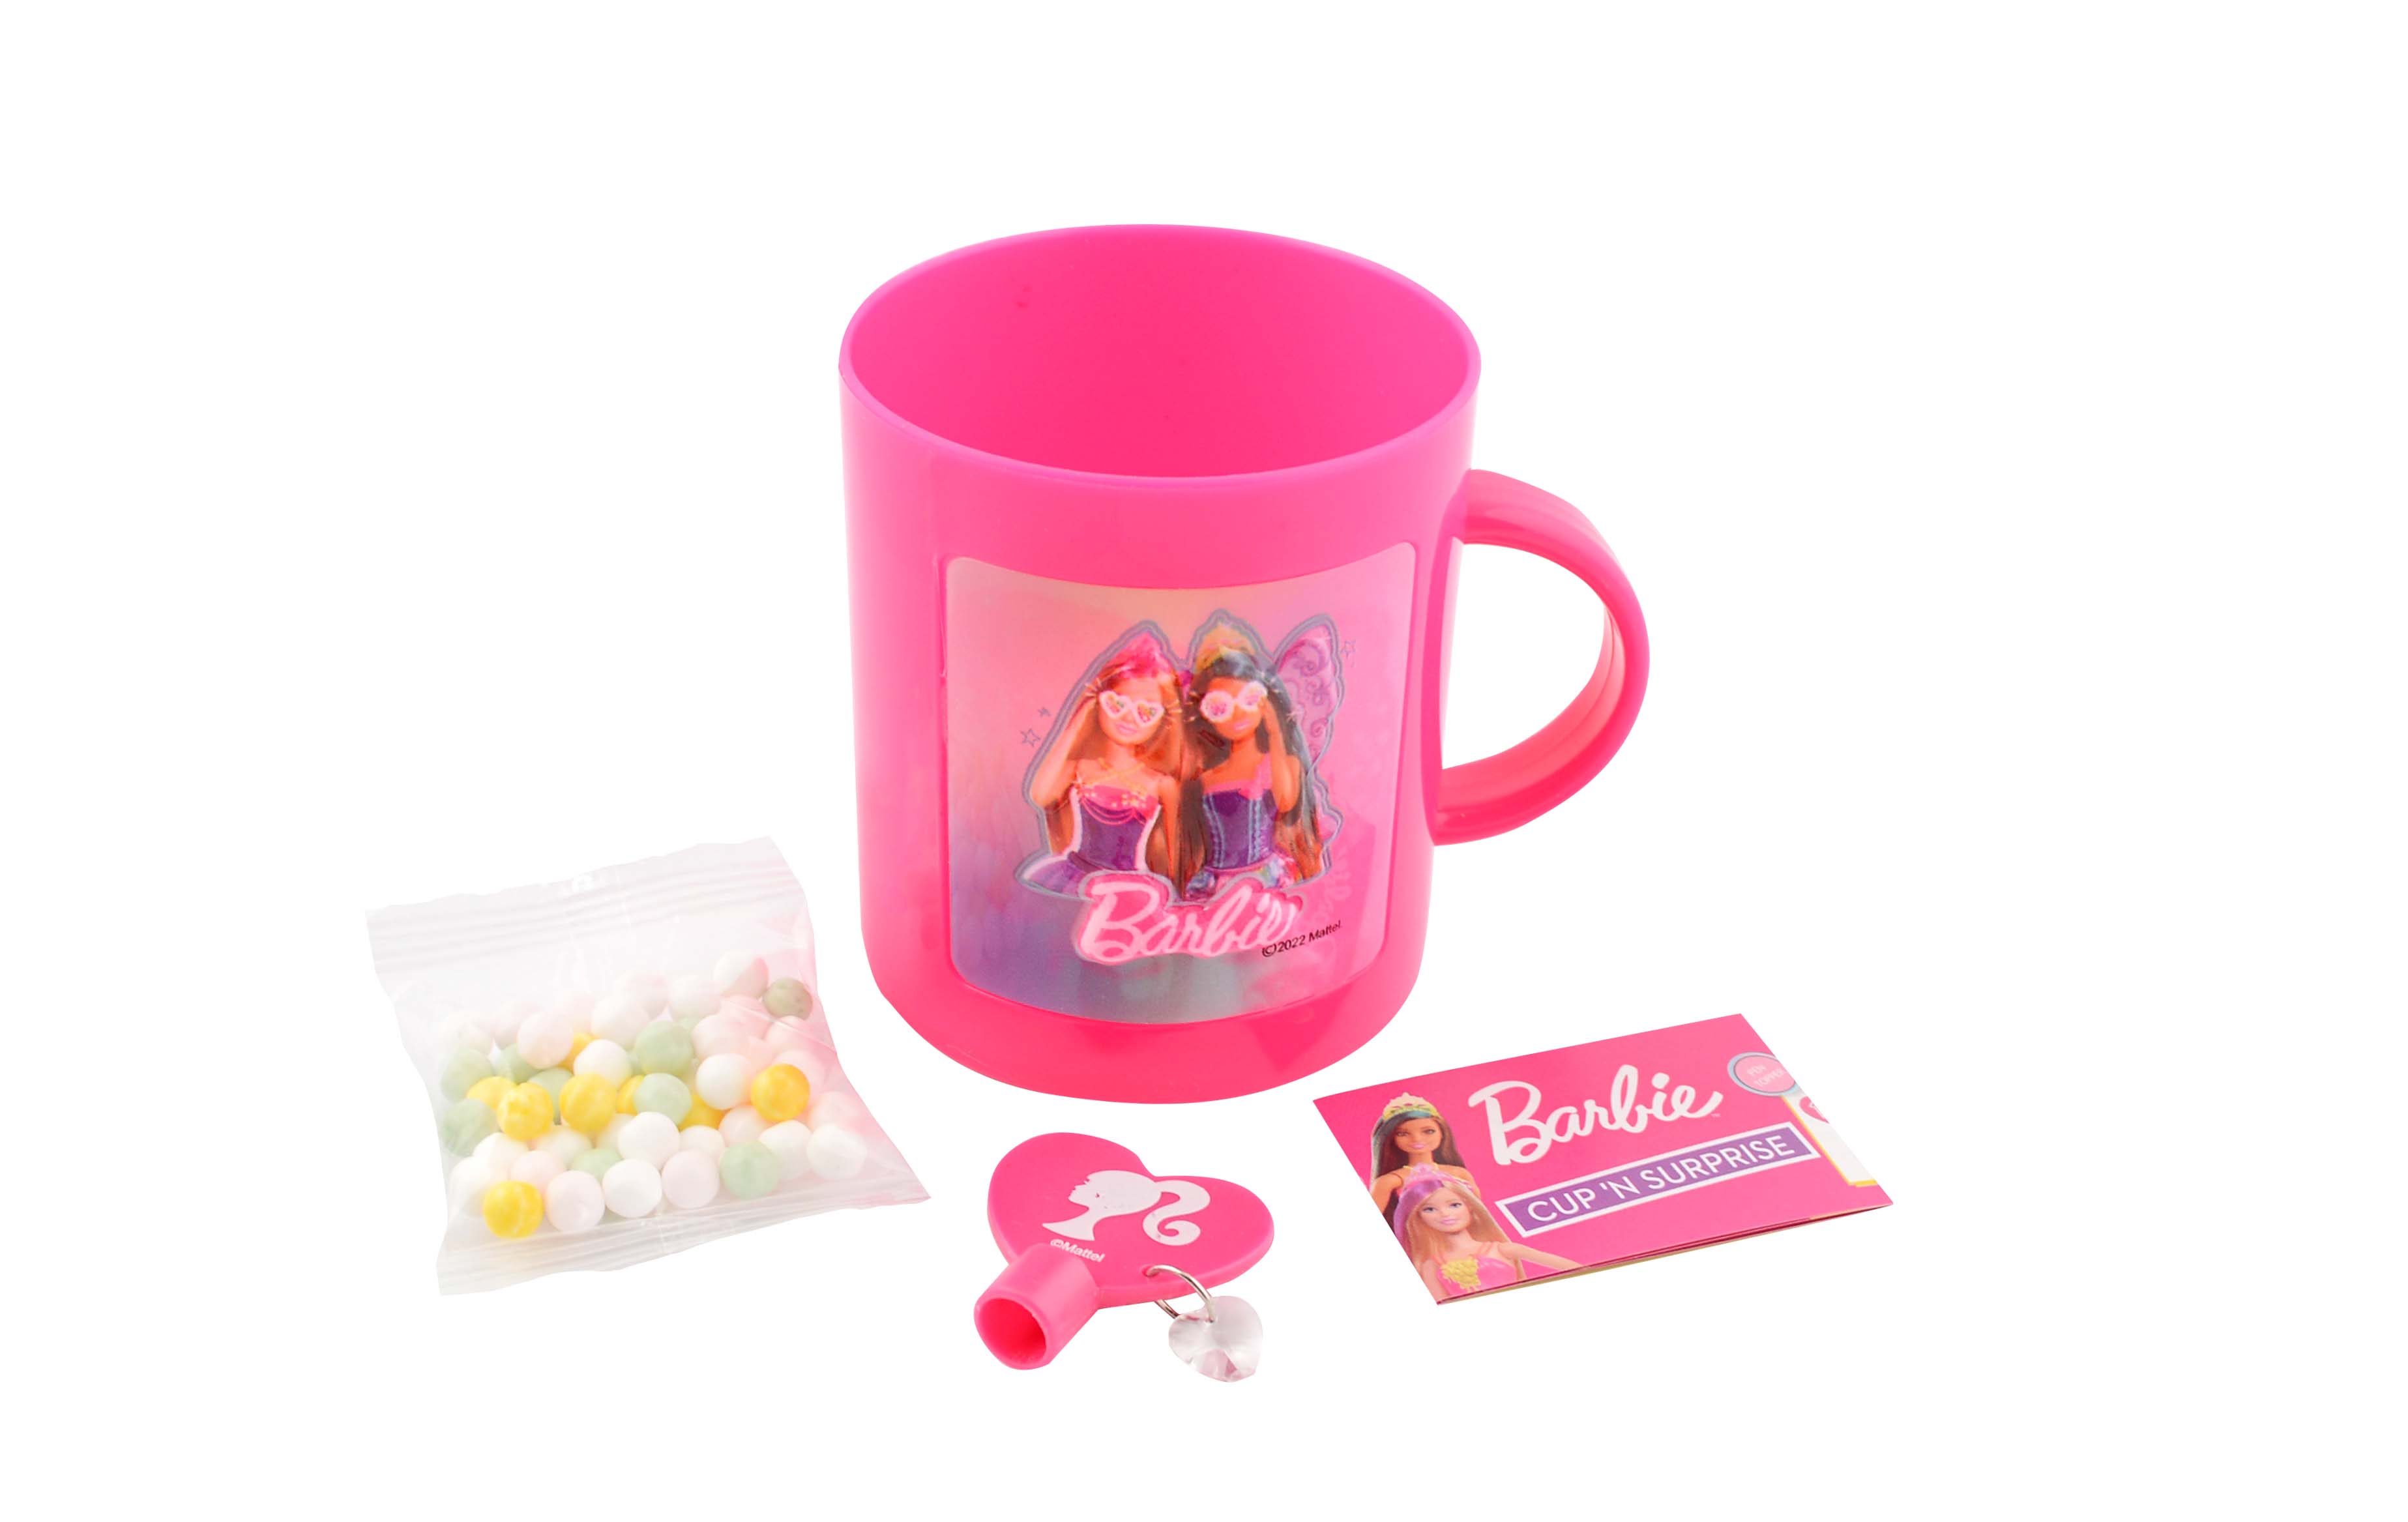 Barbie Candy Cup s cukr. 10g x 9 ks